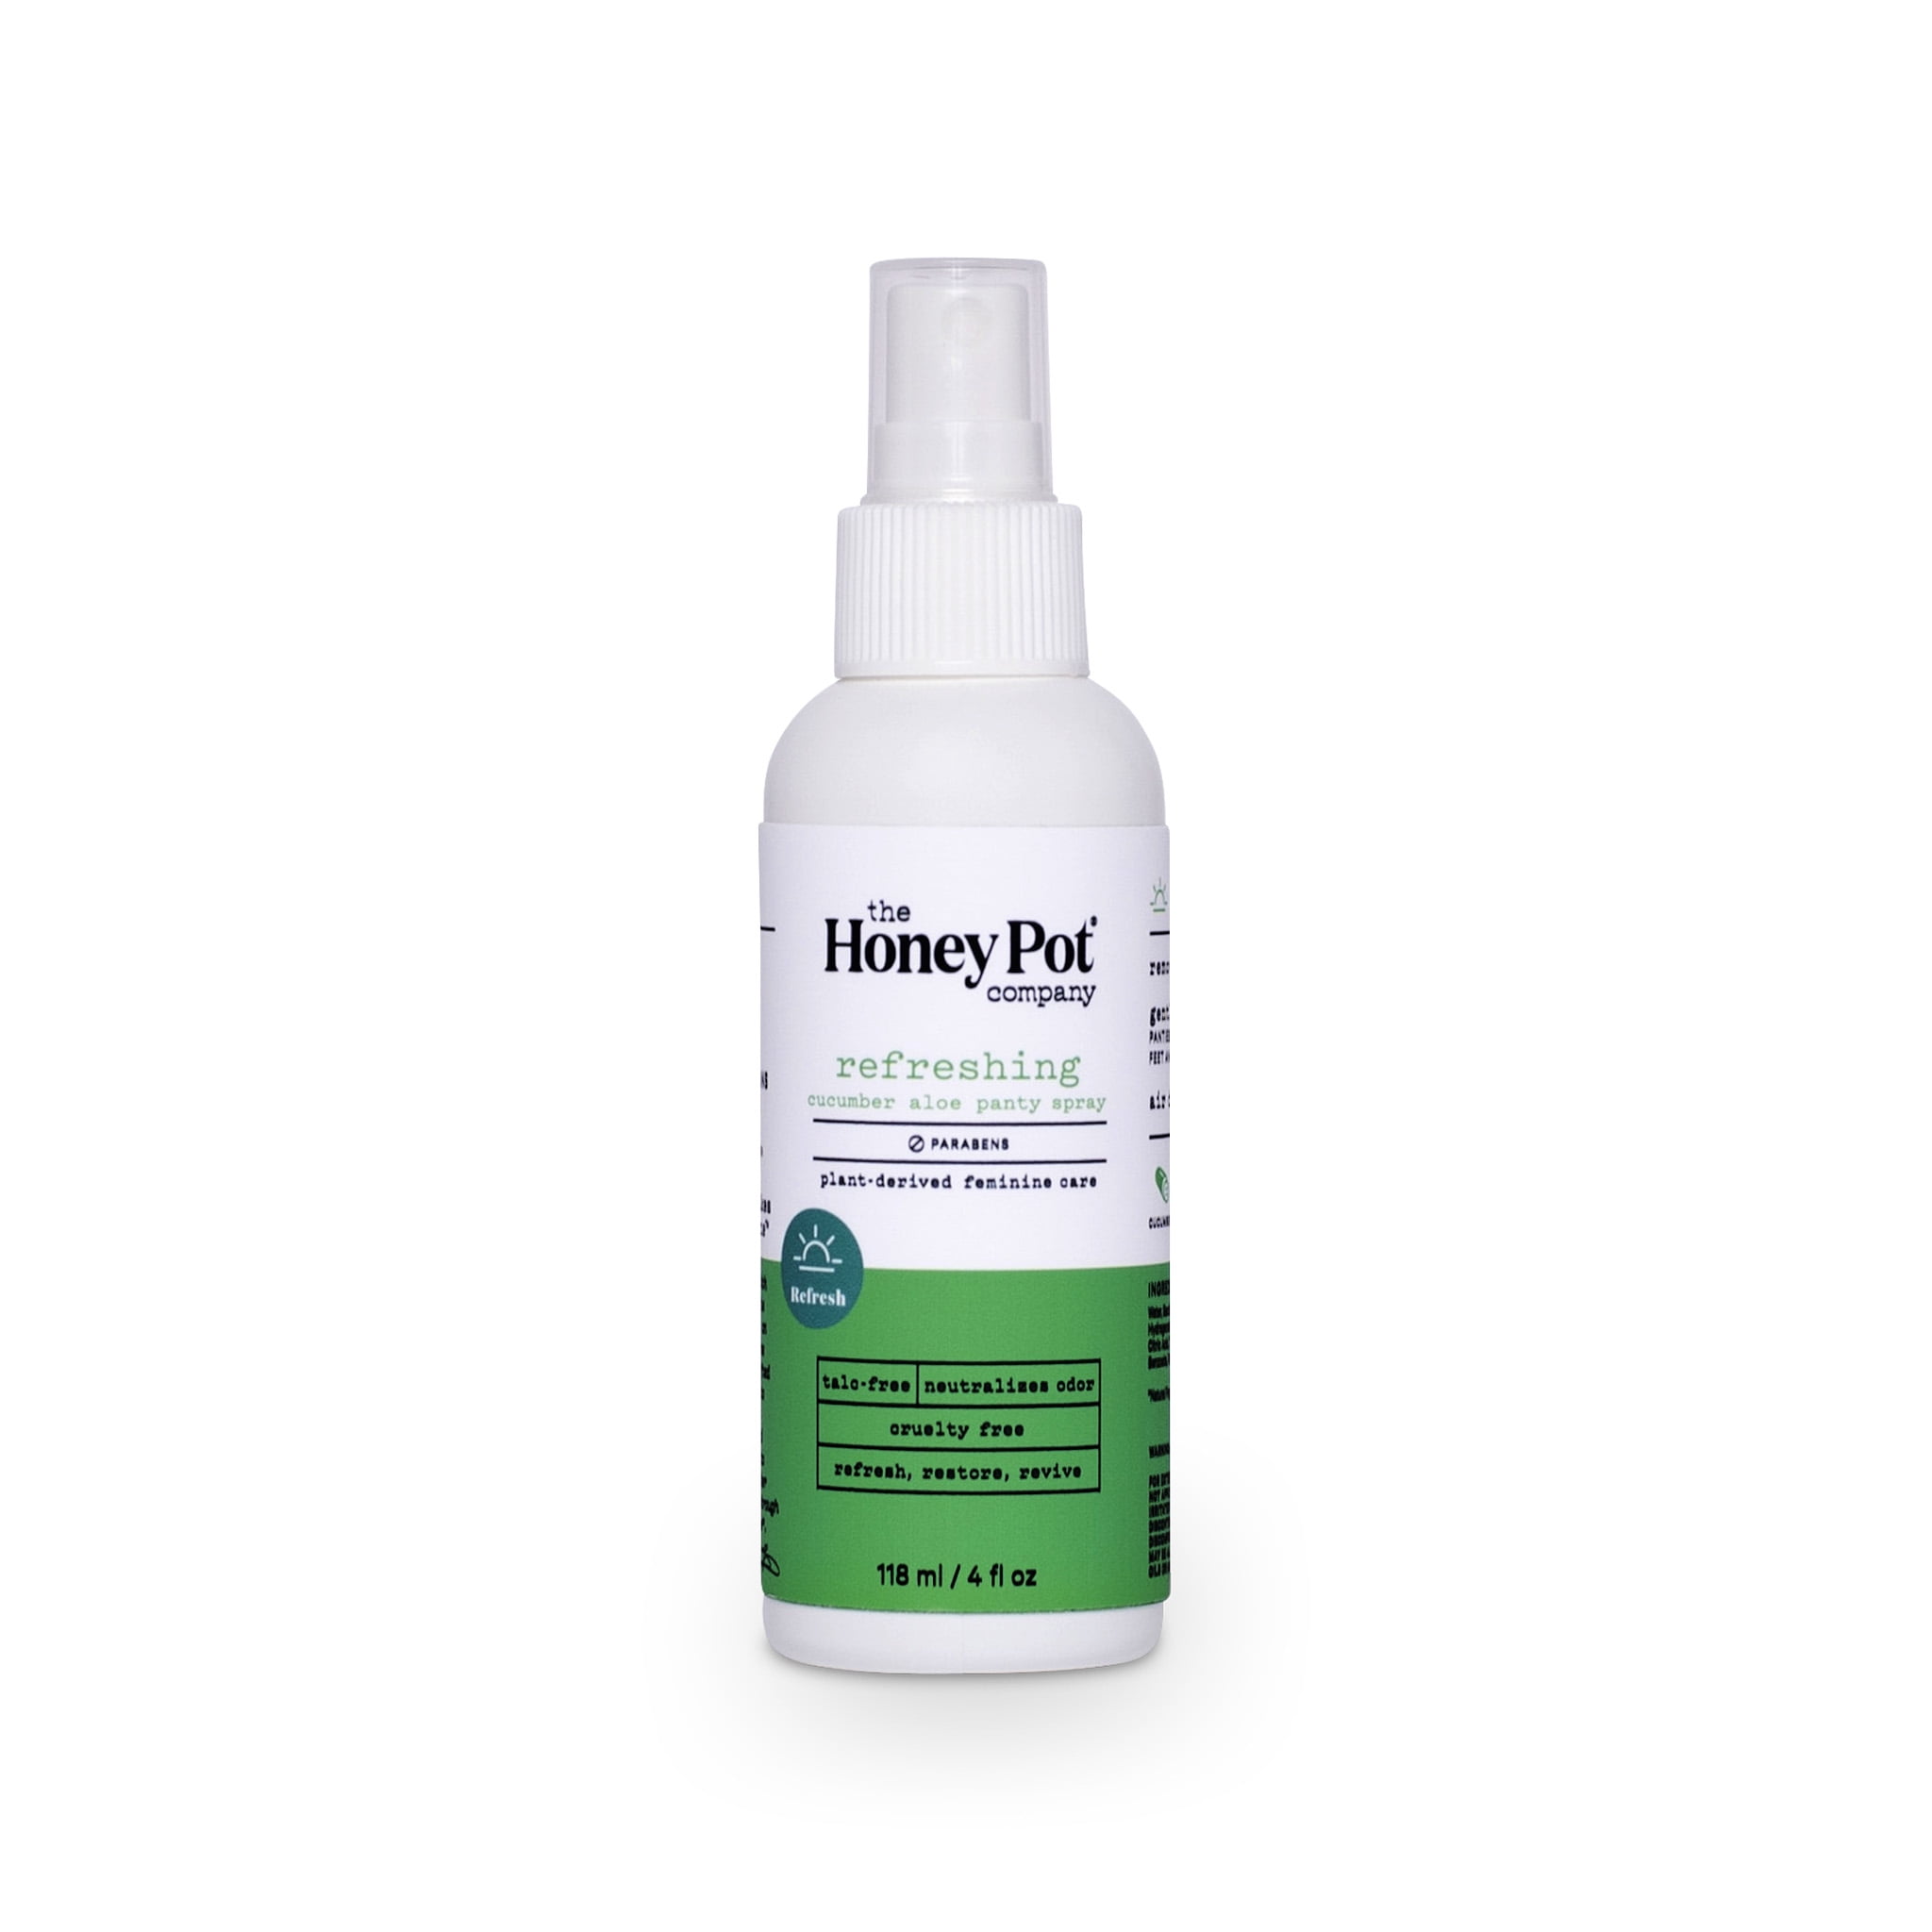 The Honey Pot Company, Refreshing Cucumber Aloe Panty and Body Plant-Derived Deodorant Spray, 4 fl. oz.